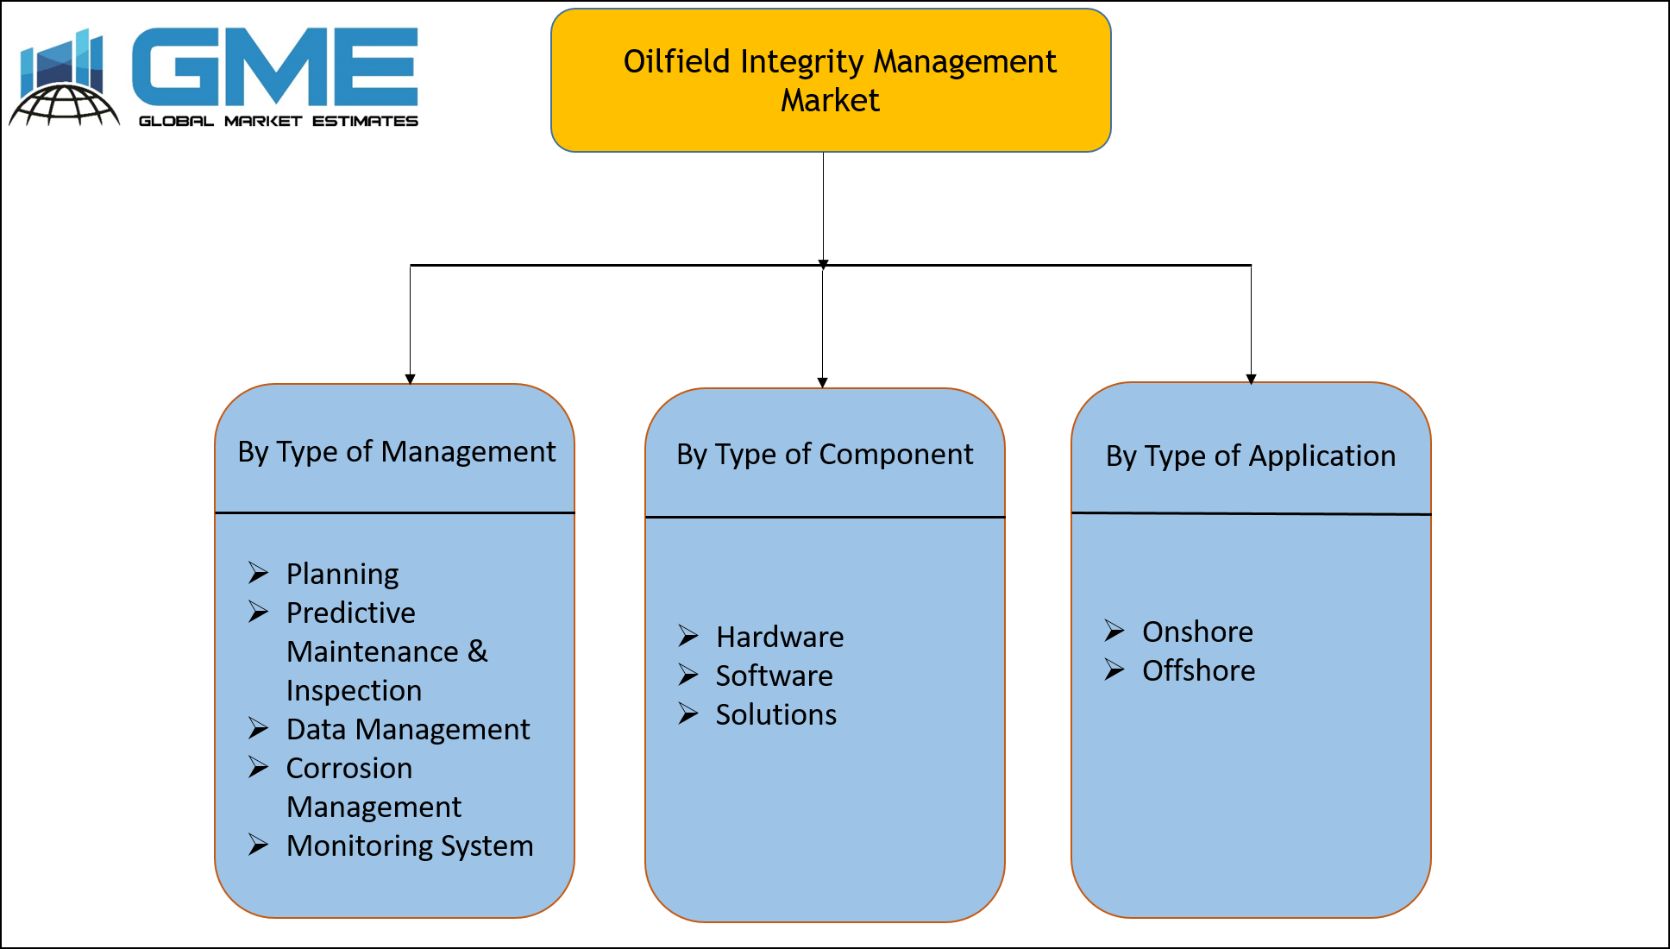 Oilfield Integrity Management Market Segmentation